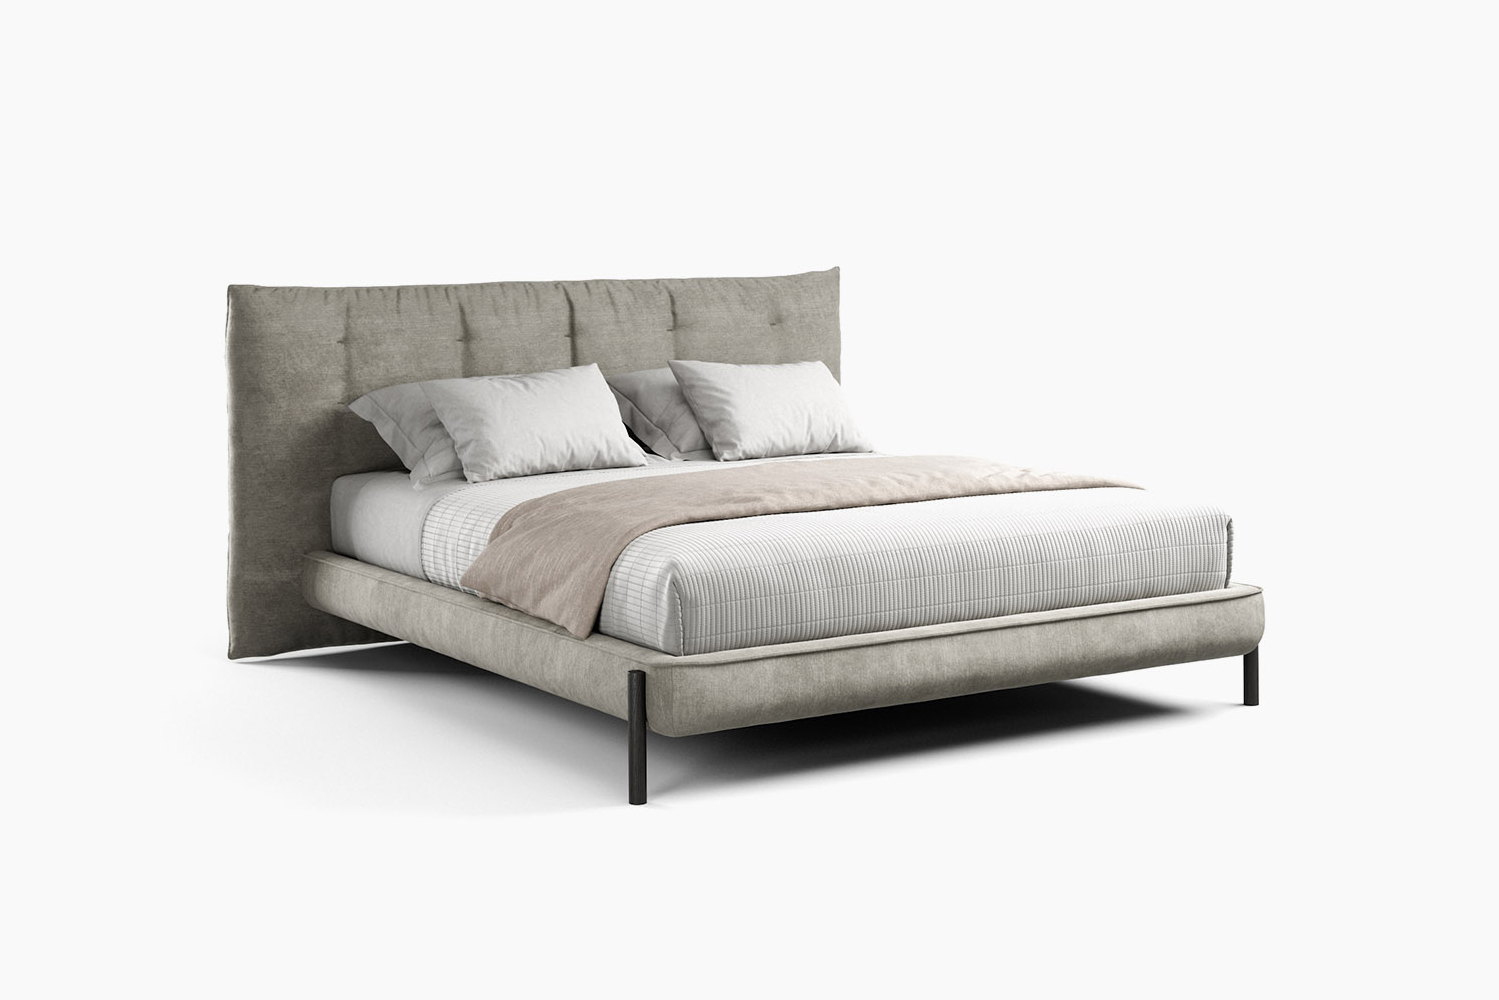 Tufte luxury, modern, contemporary Italian bed by Novamobili. Sold by Krieder UK.